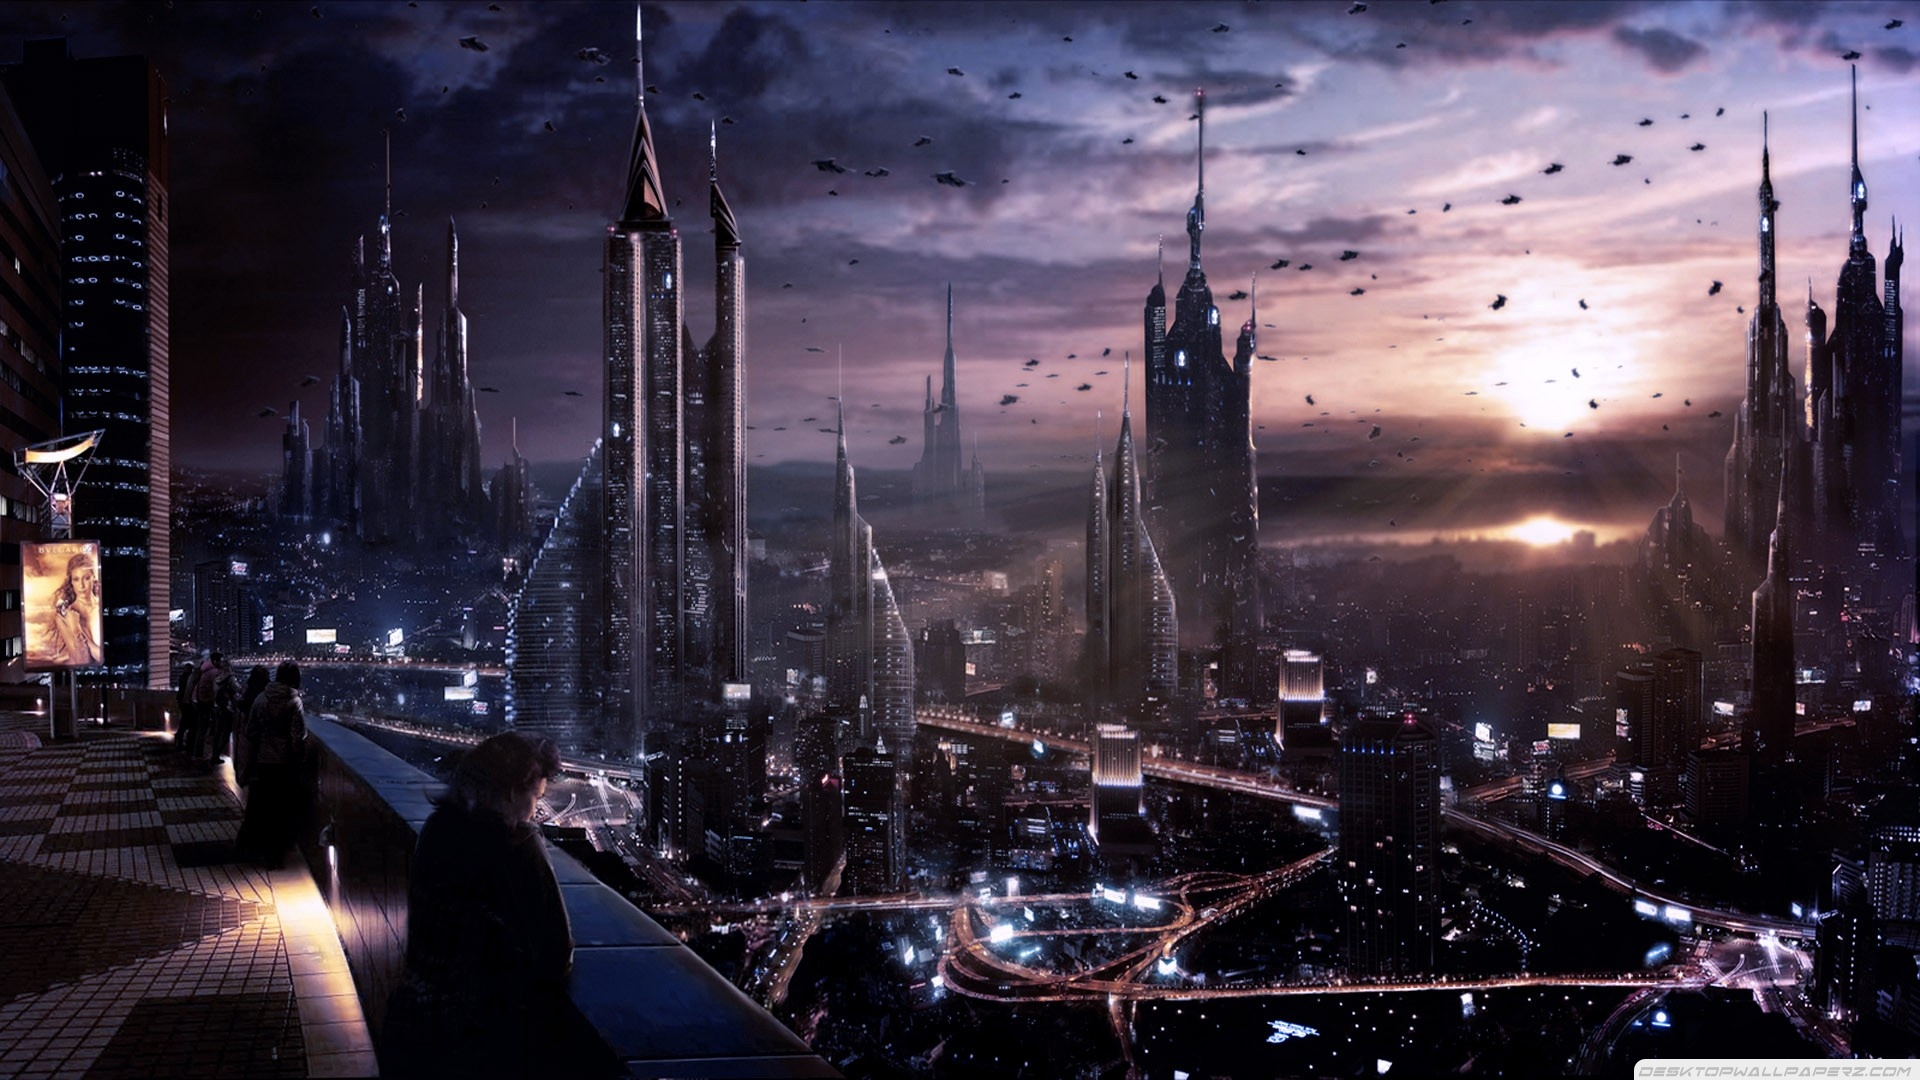 Futuristic City Fantasy Art Skyscrapers Skylines At Night